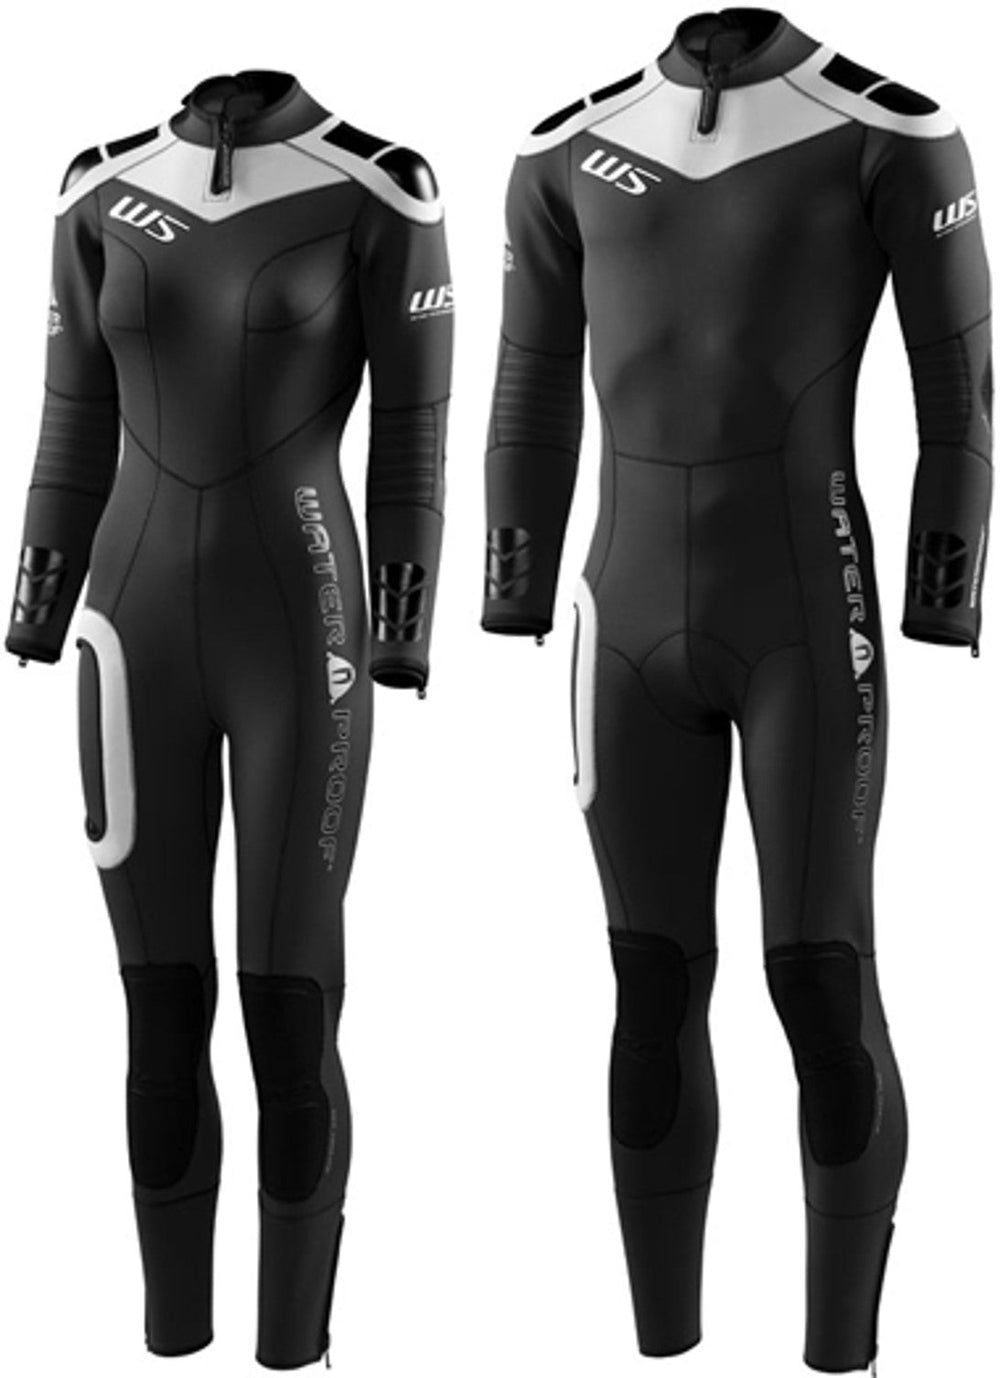 Waterproof Waterproof W5 3.5mm Wetsuit - Mens by Oyster Diving Shop